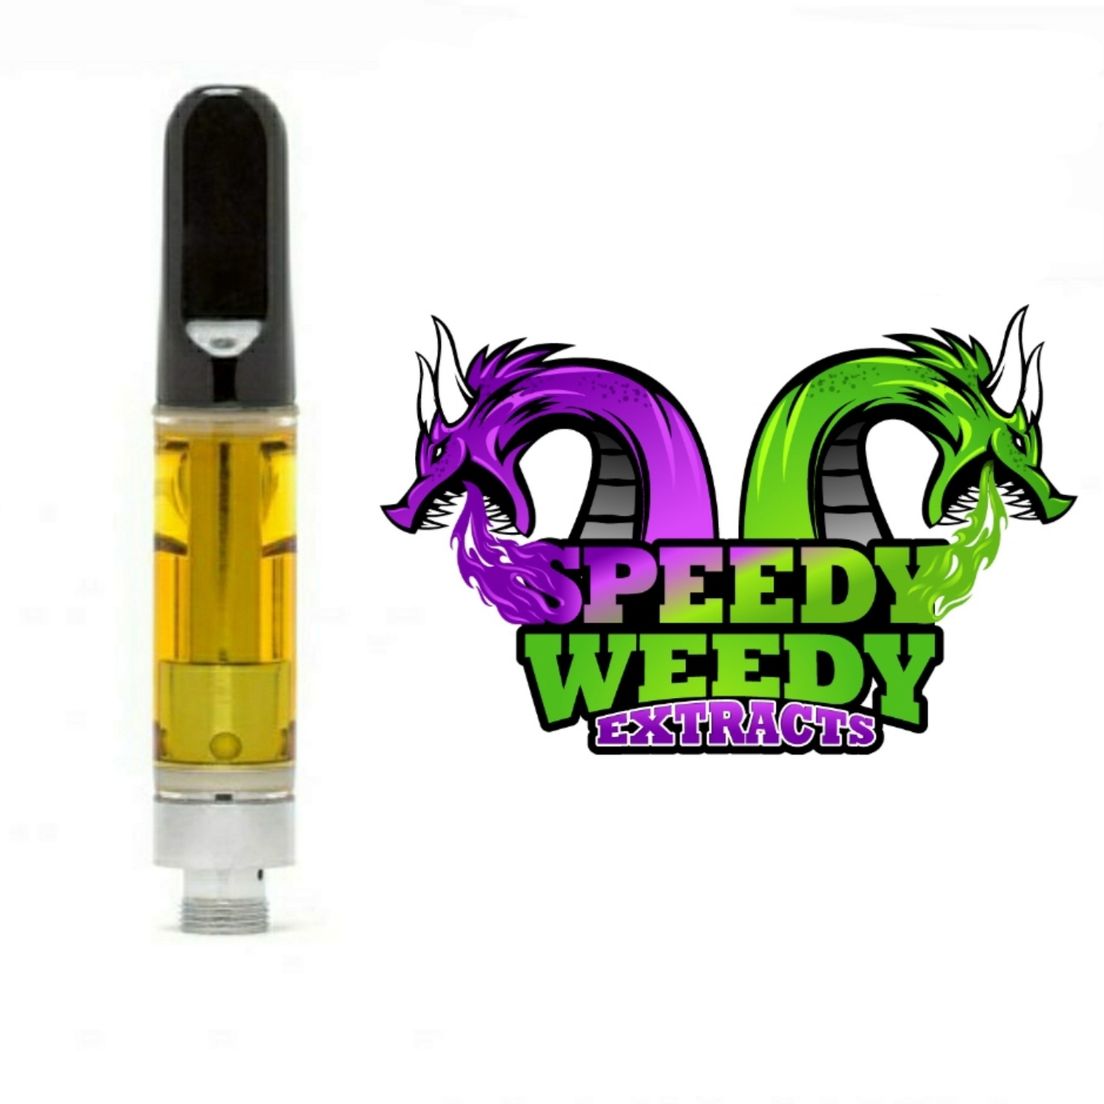 1. Speedy Weedy 1g THC Vape Cartridge - Bubba Kush (I) 3/$60 Mix/Match